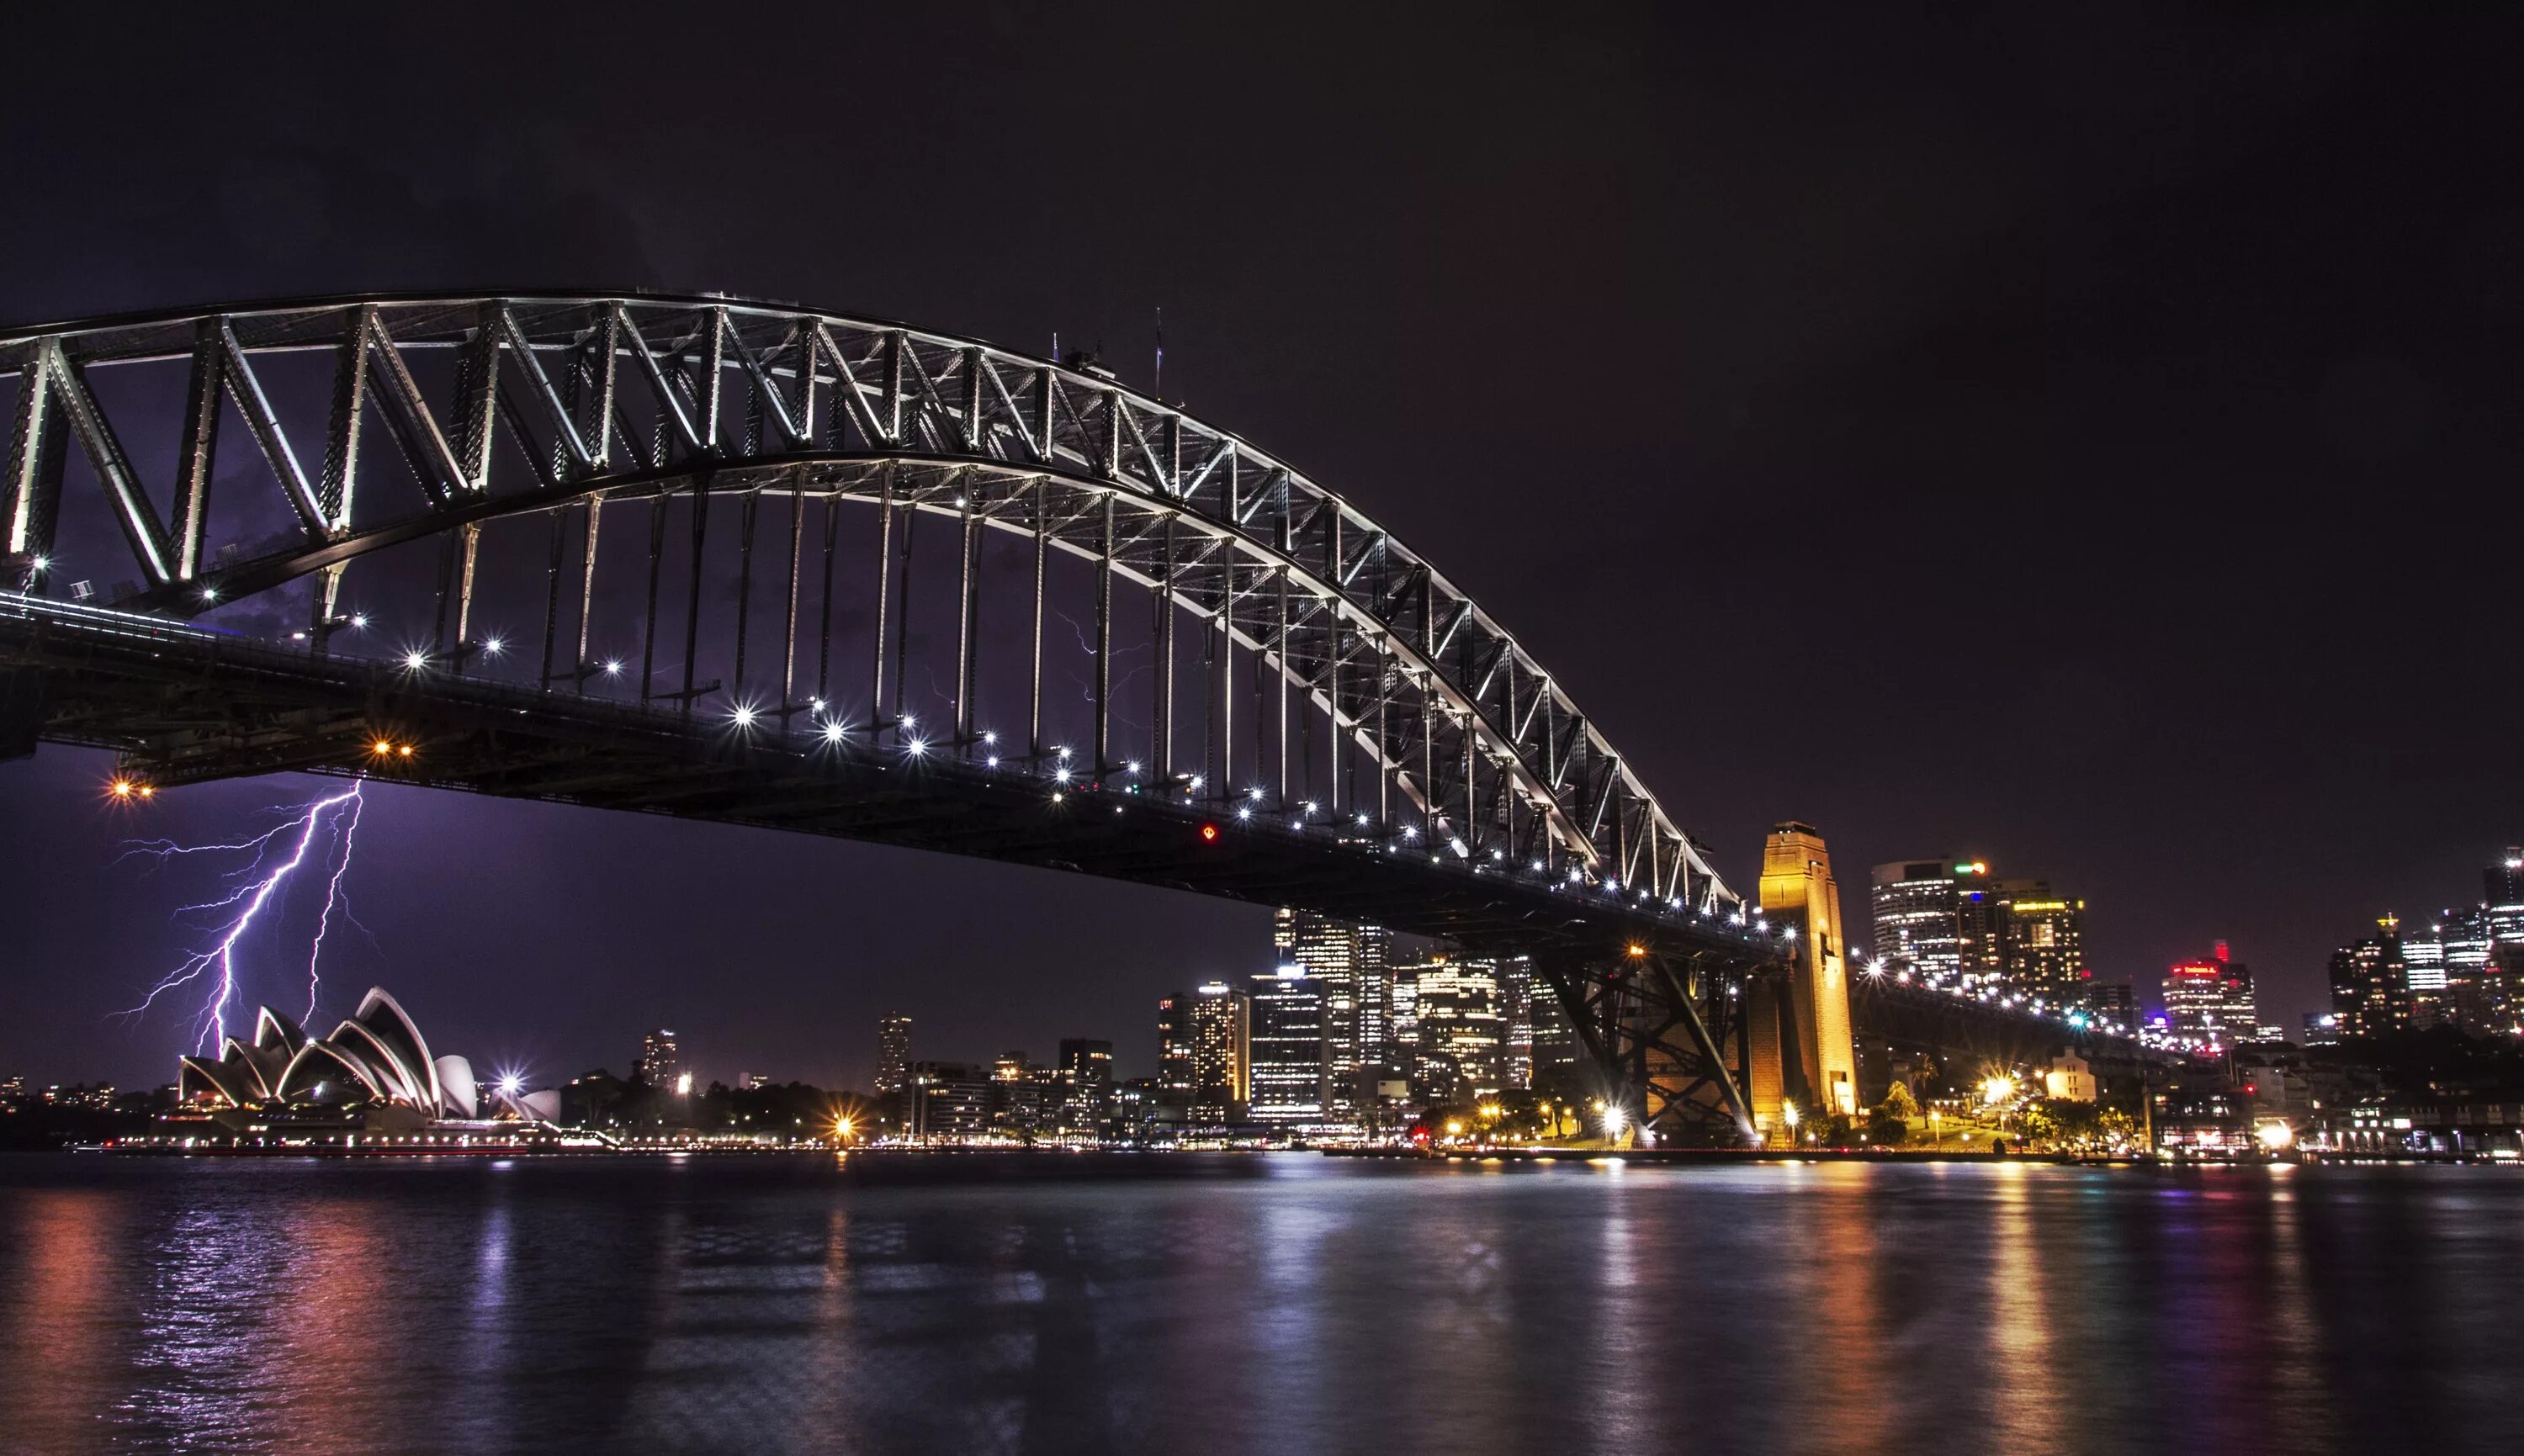 Бридж. Австралийский мост Харбор-бридж. Харборский мост Сидней. Мост через Сиднейскую гавань. Мост Харбор бридж Архитектор.